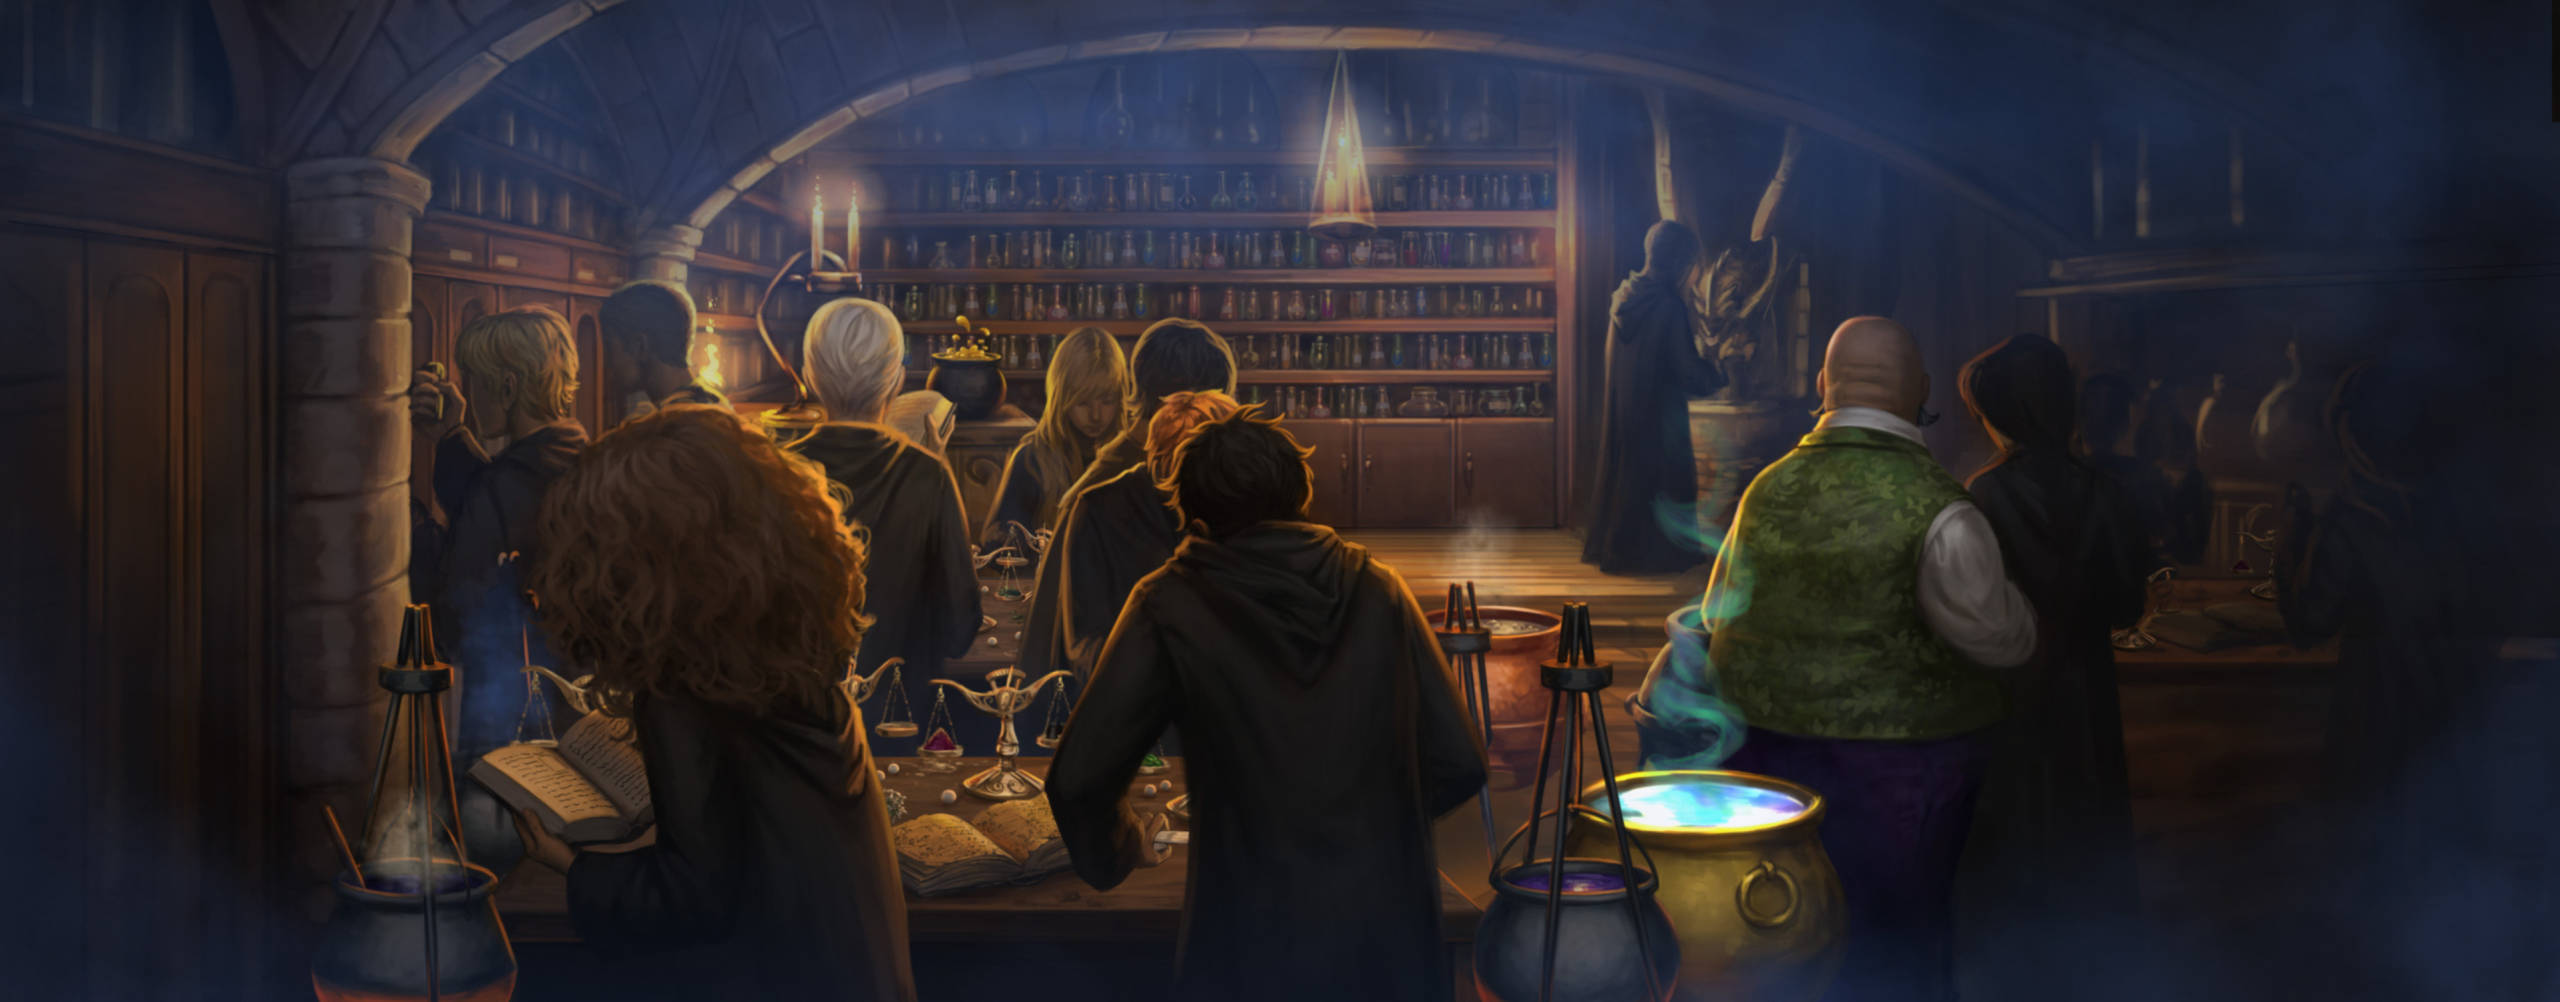 Professor Slughorn teaches potions to Harry's class